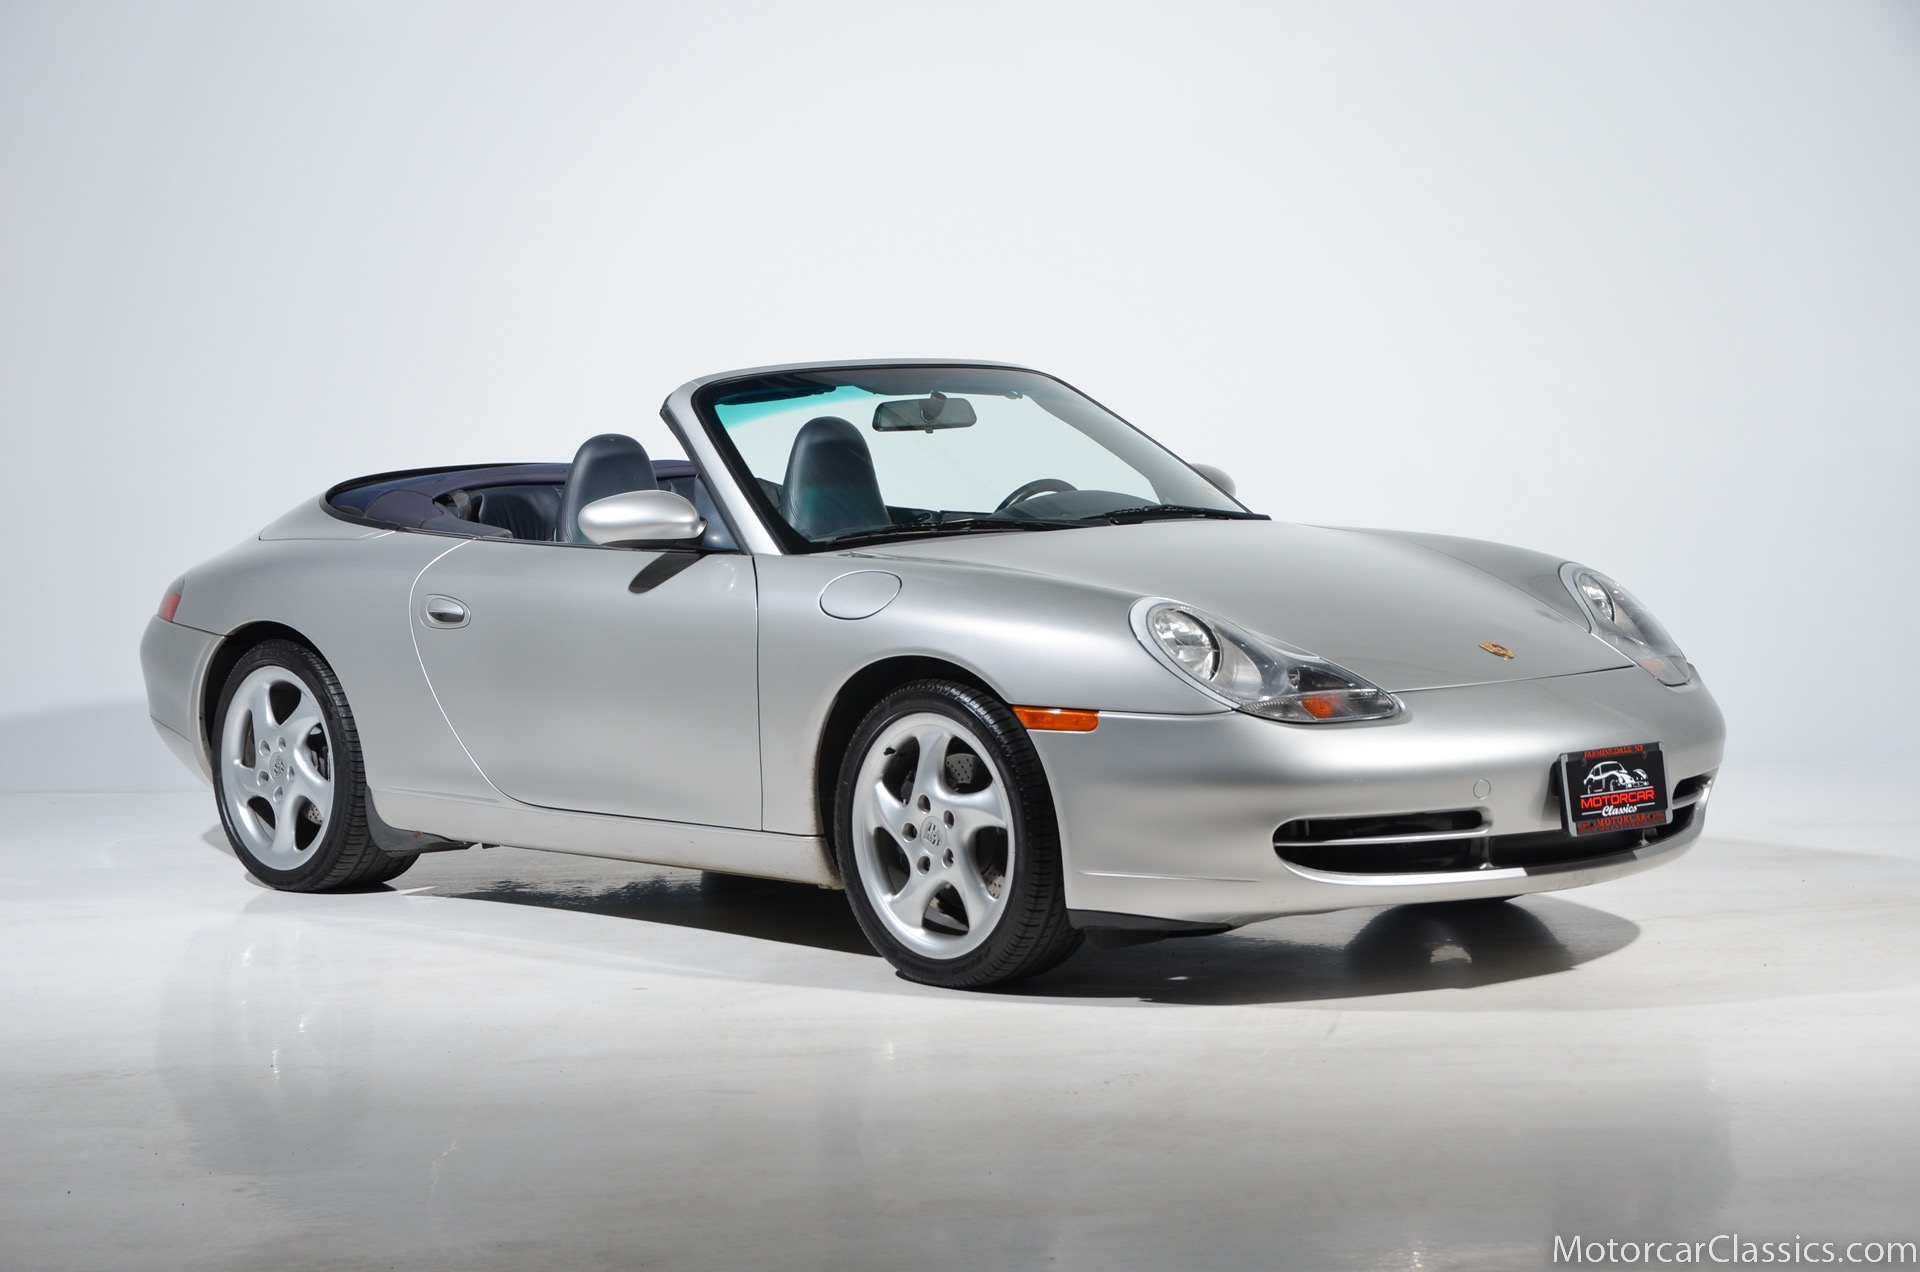 Used 1999 Porsche 911 Carrera For Sale ($32,900) | Motorcar Classics Stock  #2319